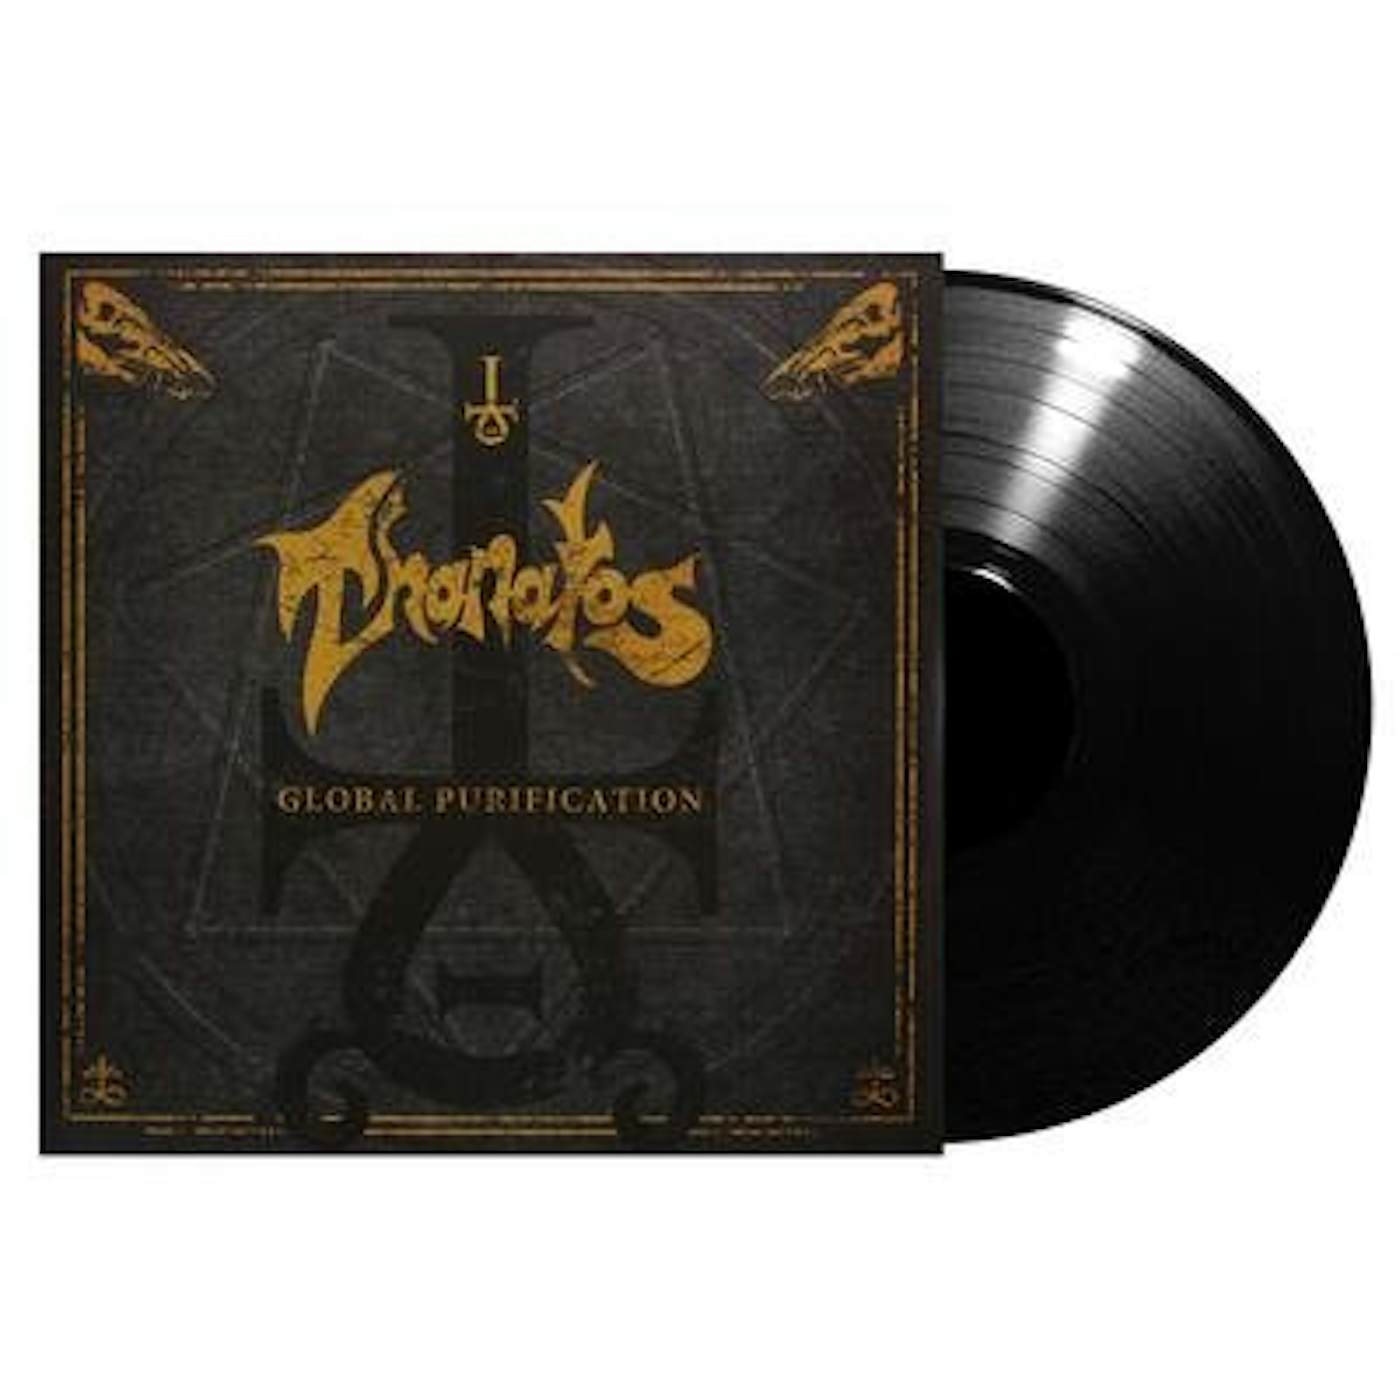 Thanatos Global Purification Vinyl Record